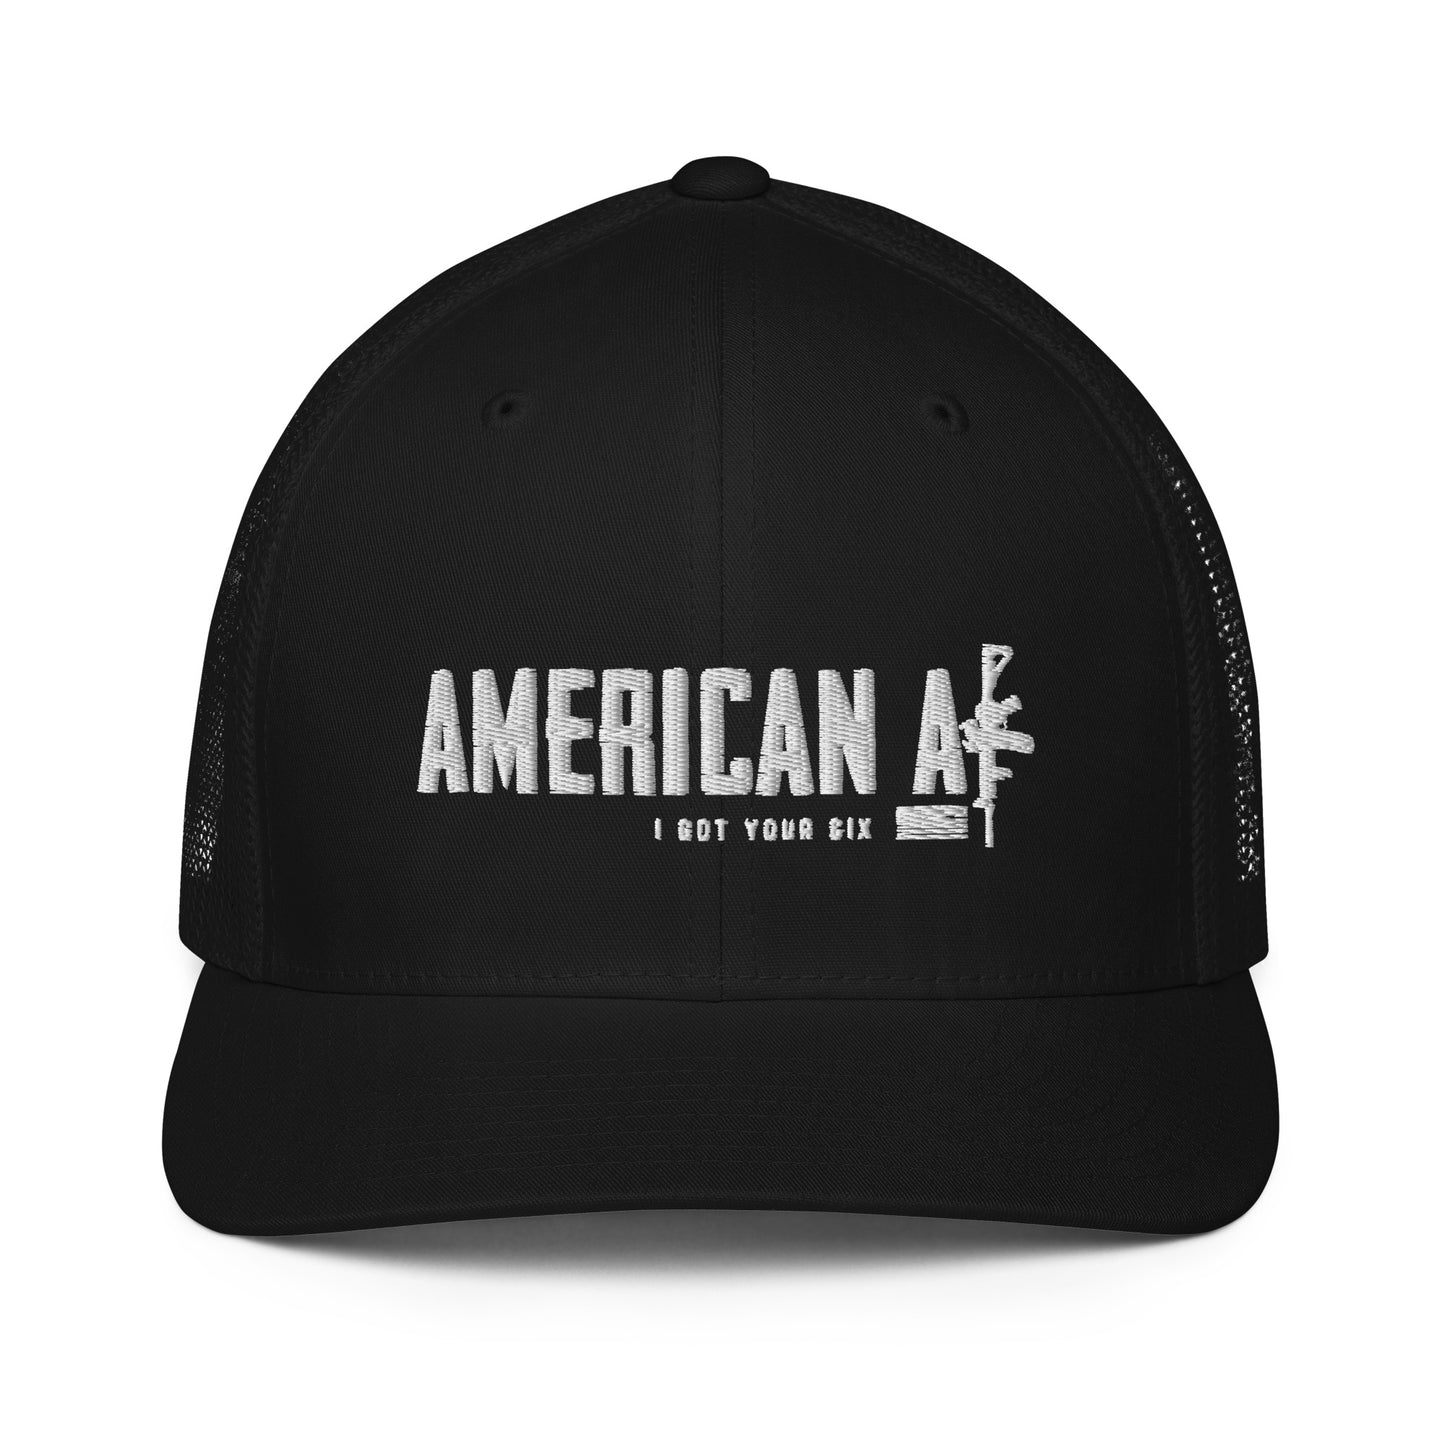 AMERICAN AF black on black trucker cap